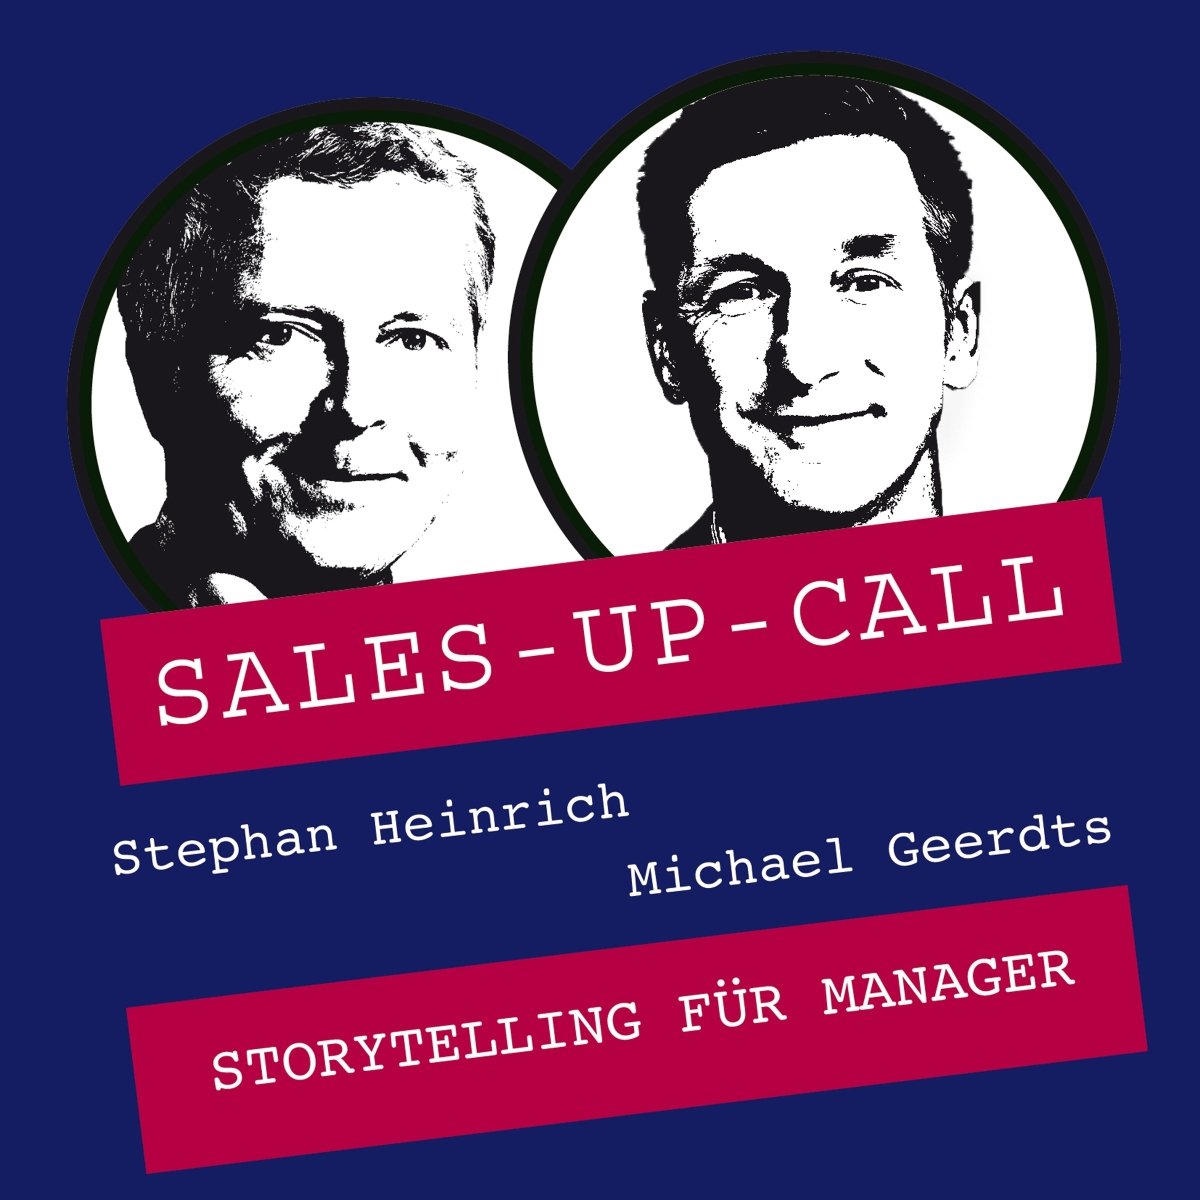 Storytelling für Manager - Sales-up-Call - Stephan Heinrich